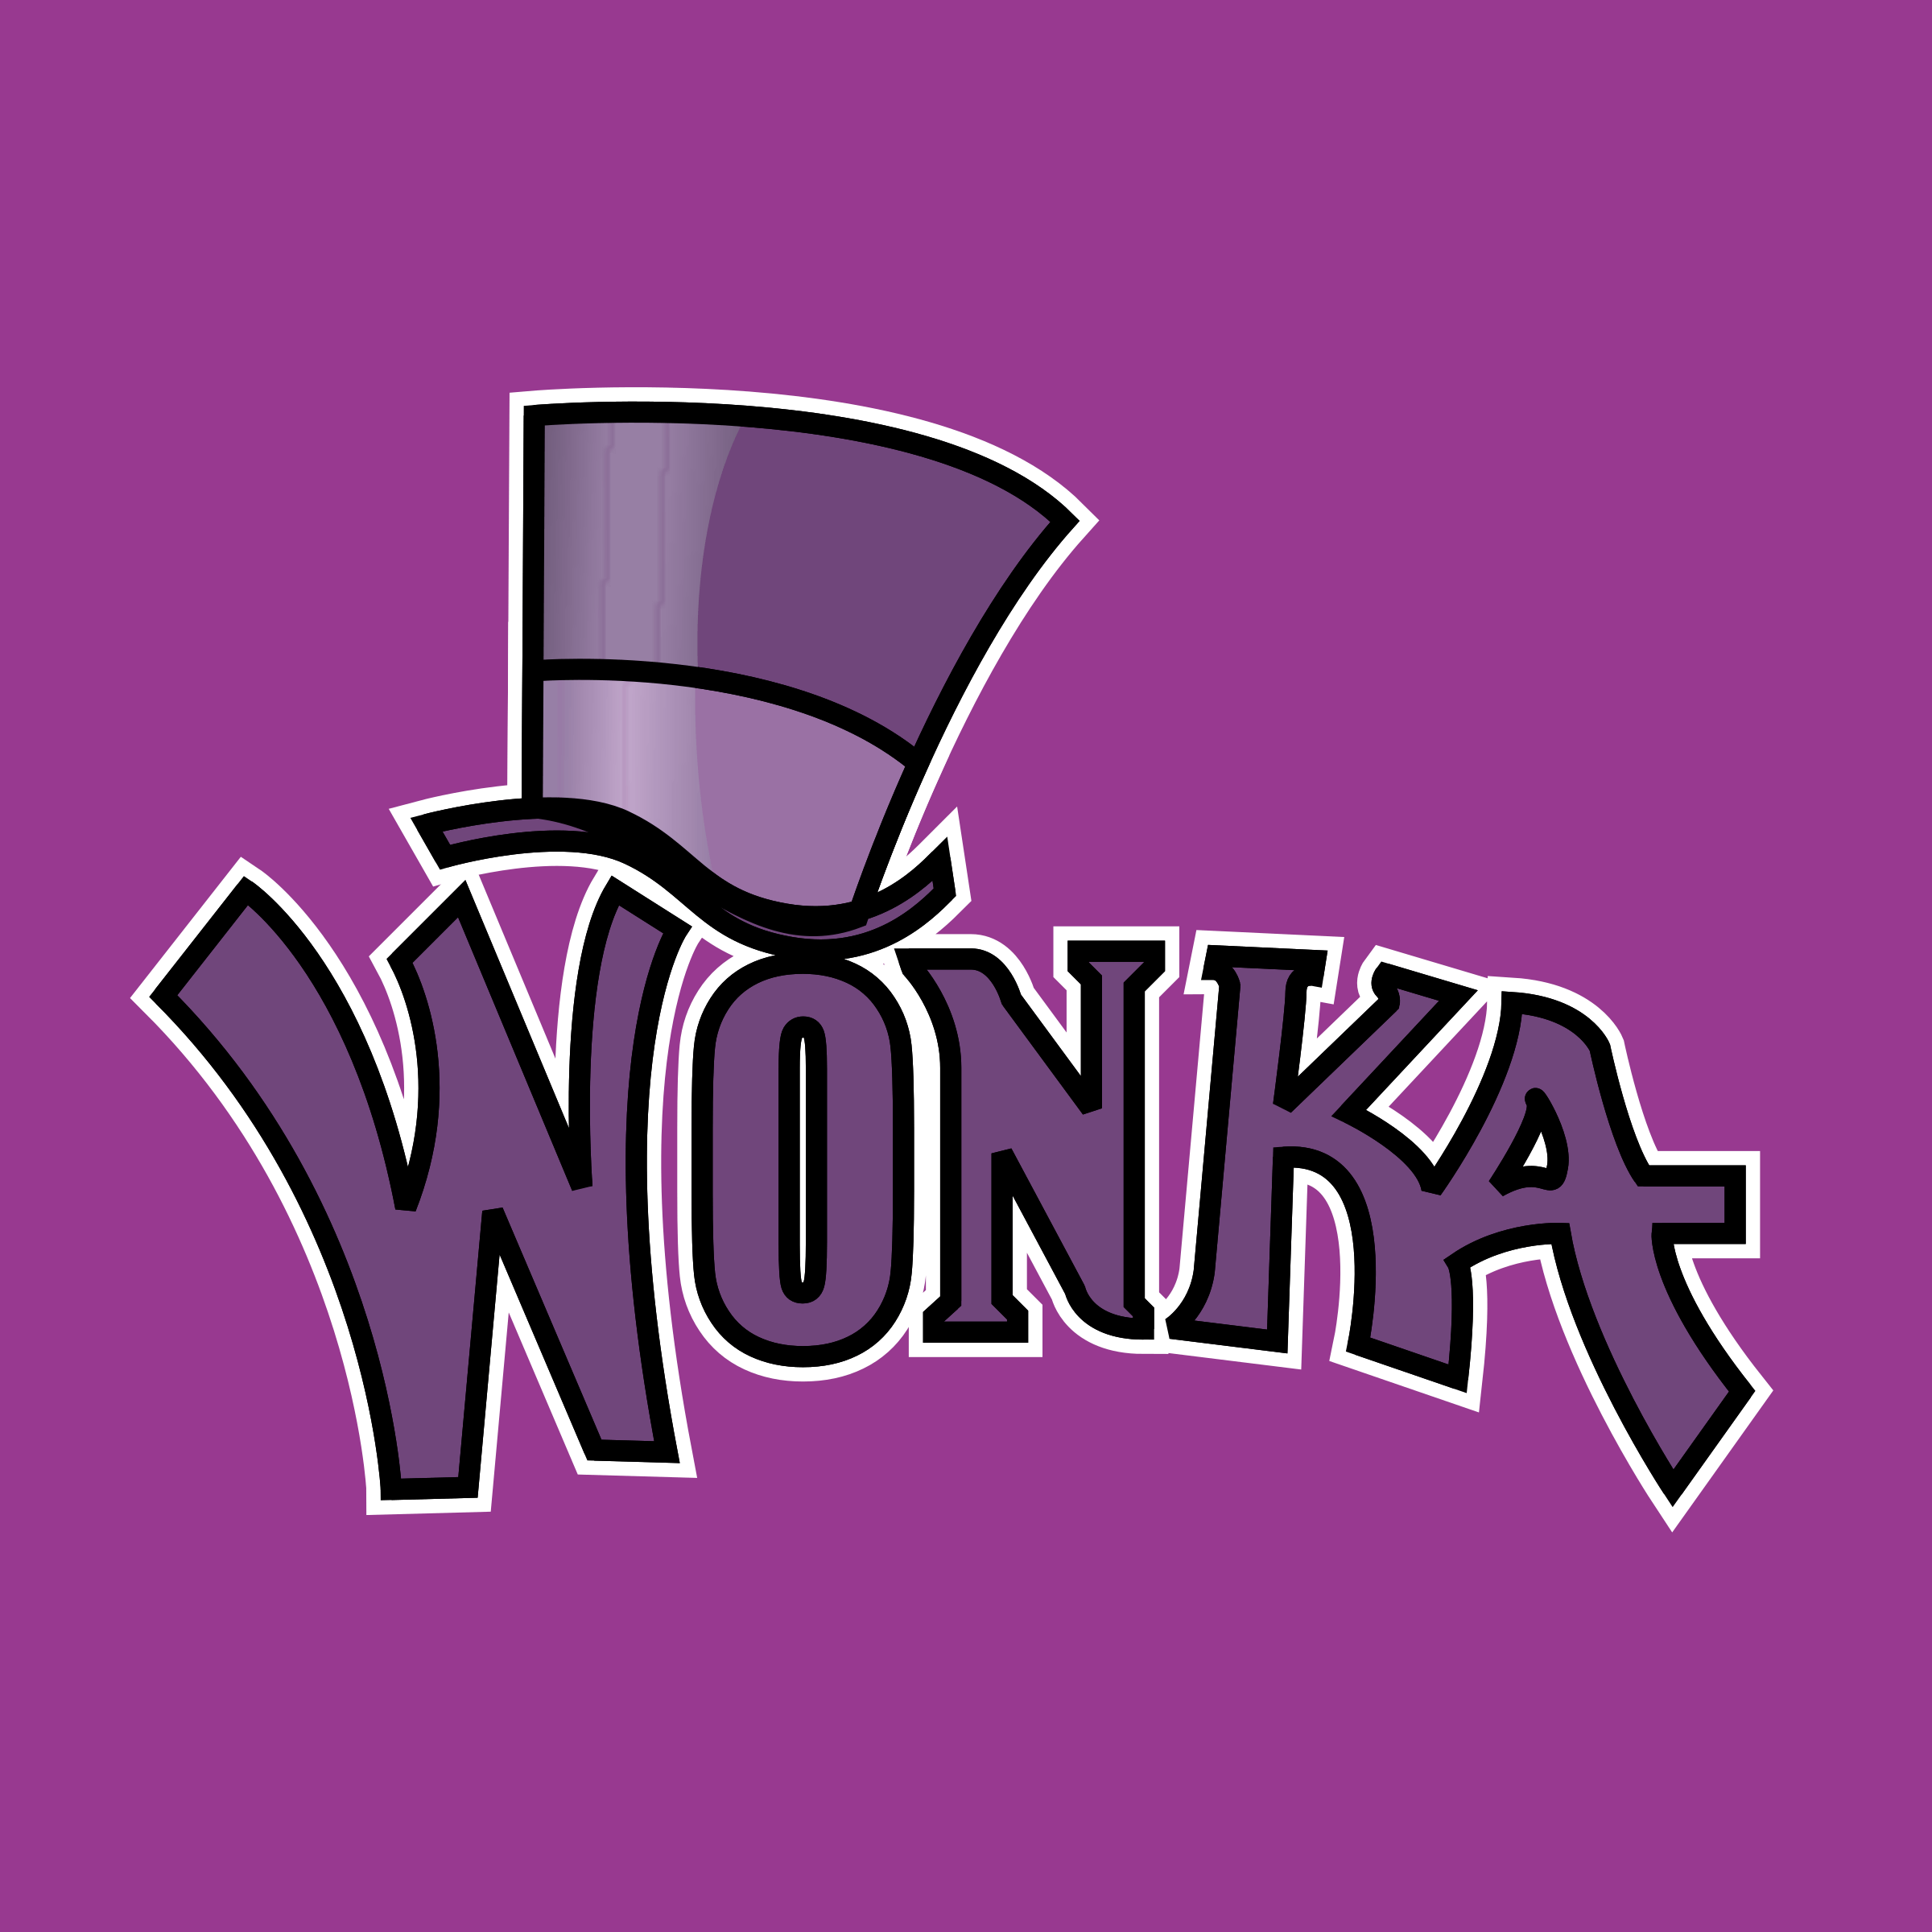 Wonka Logo - Wonka Logo PNG Transparent & SVG Vector - Freebie Supply